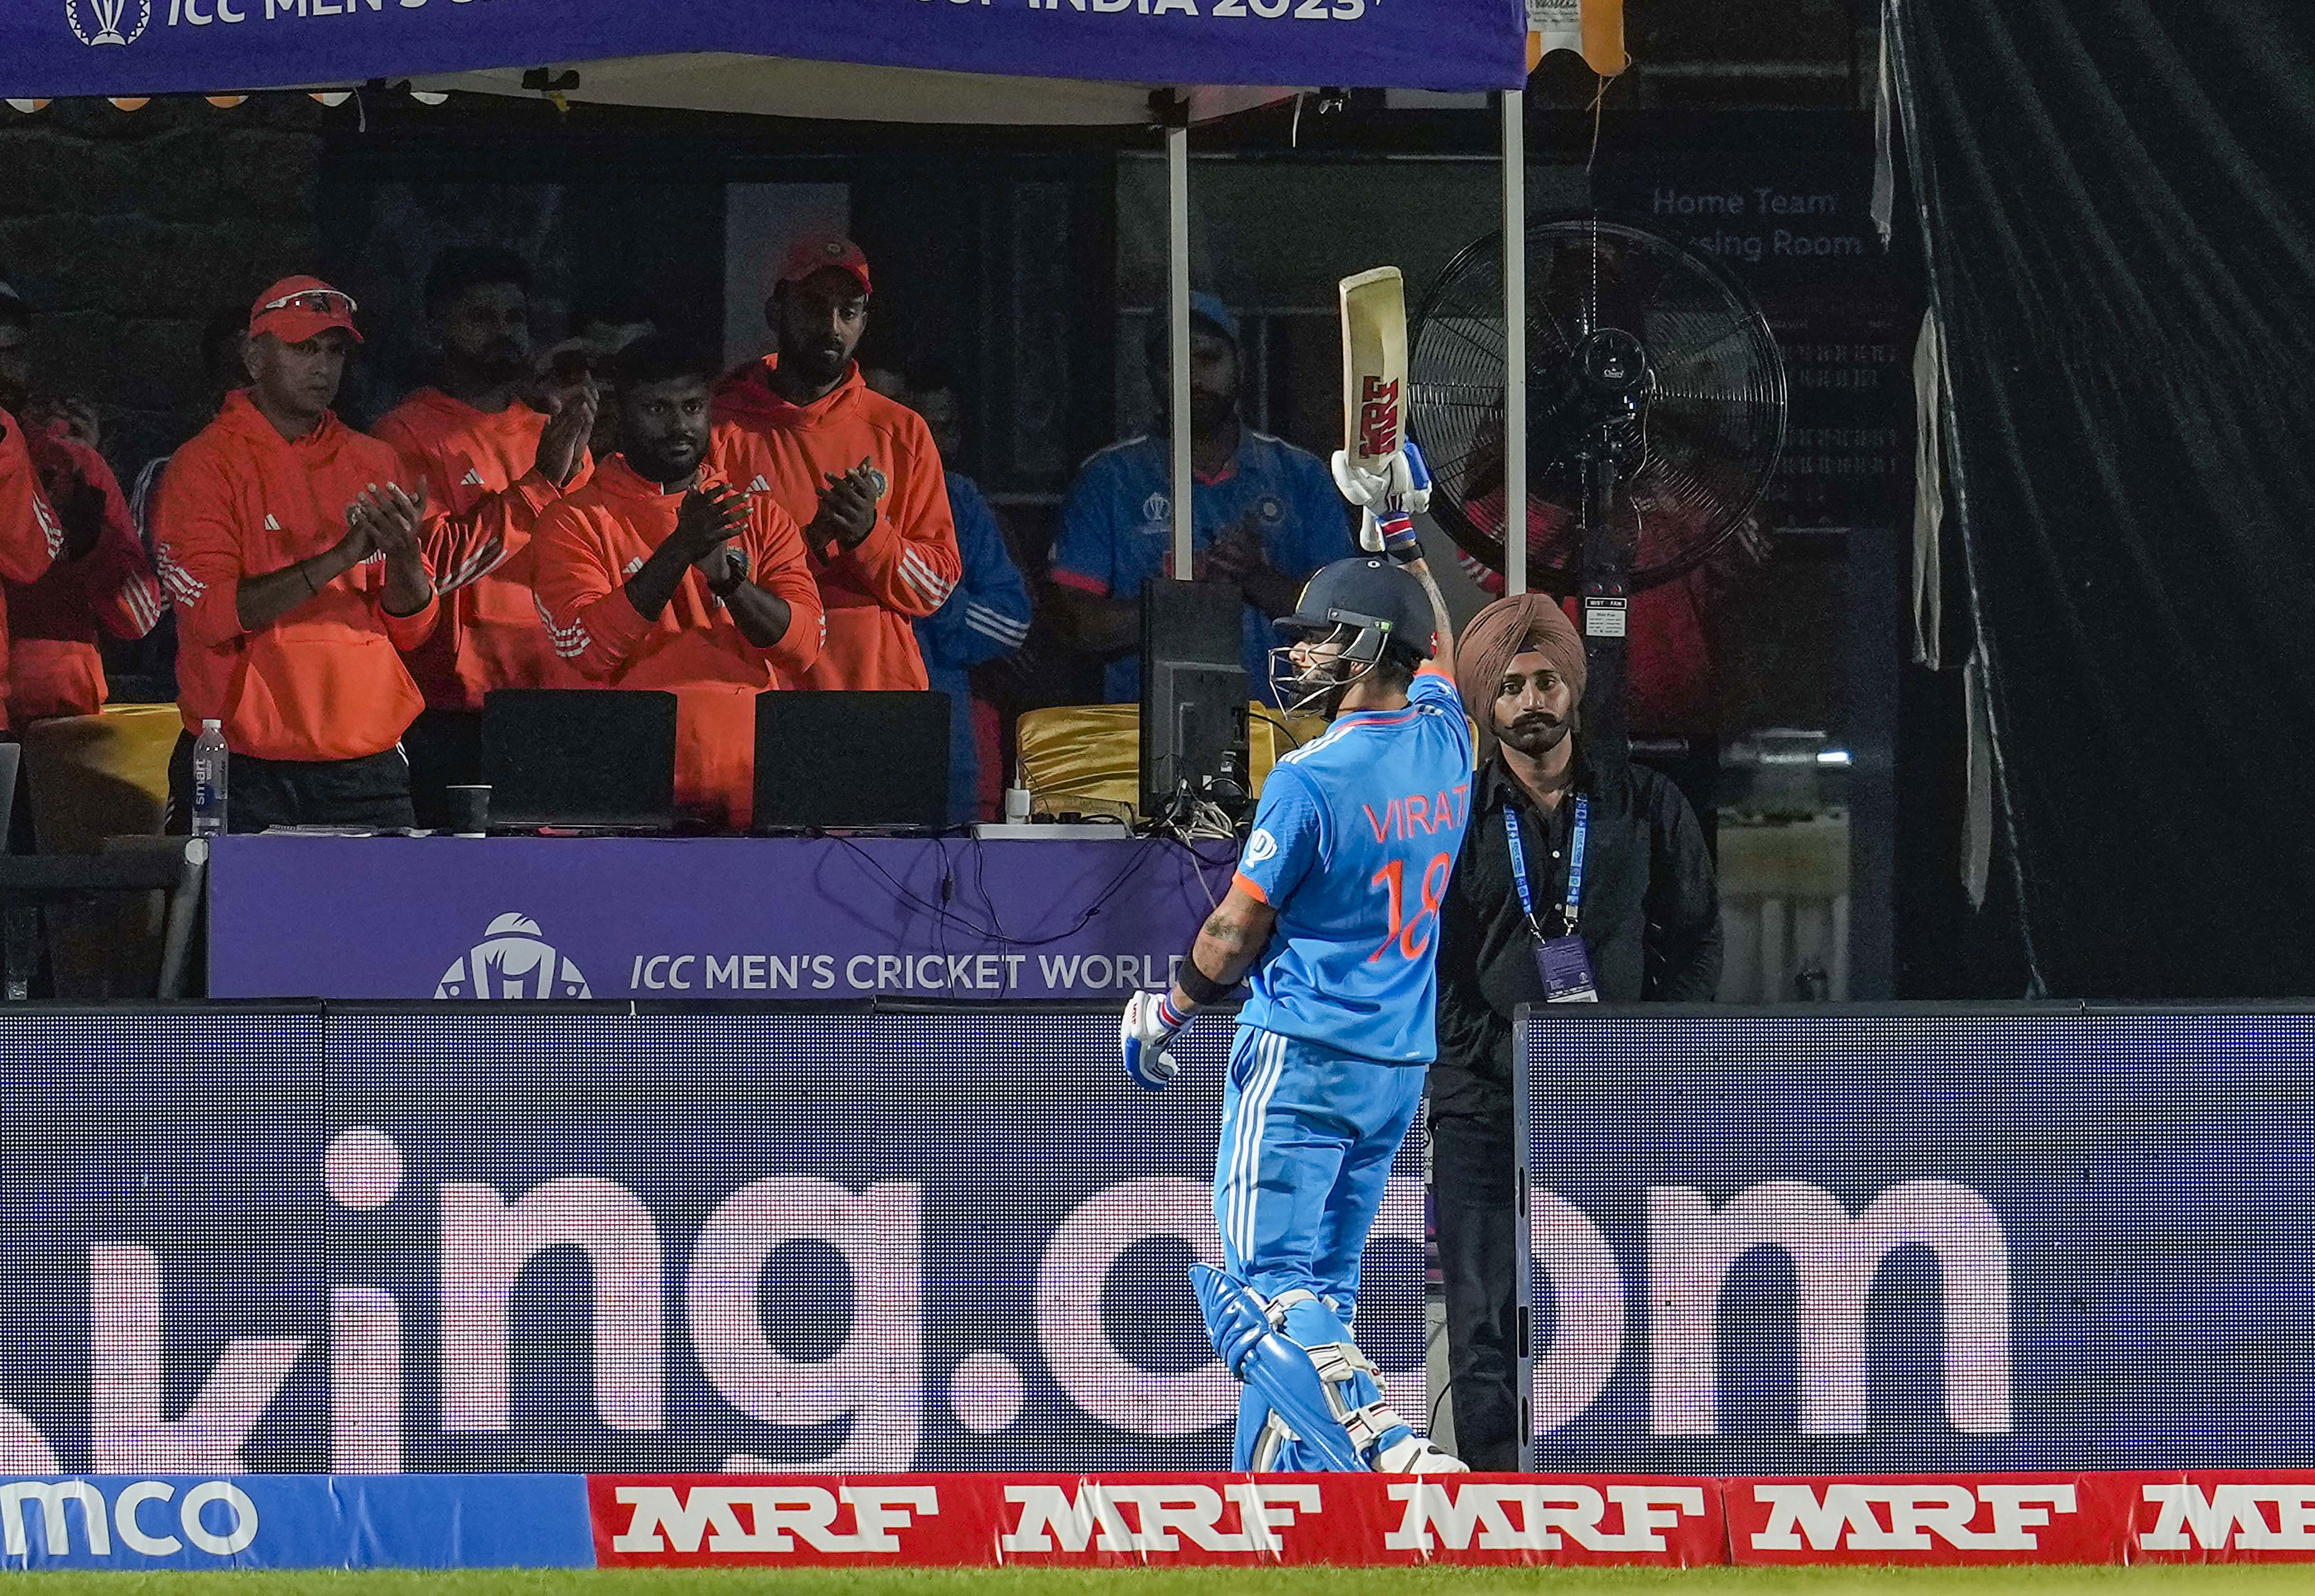 Surya Kumar Yadav: Is jersey no. 69 lucky for the batsman? The